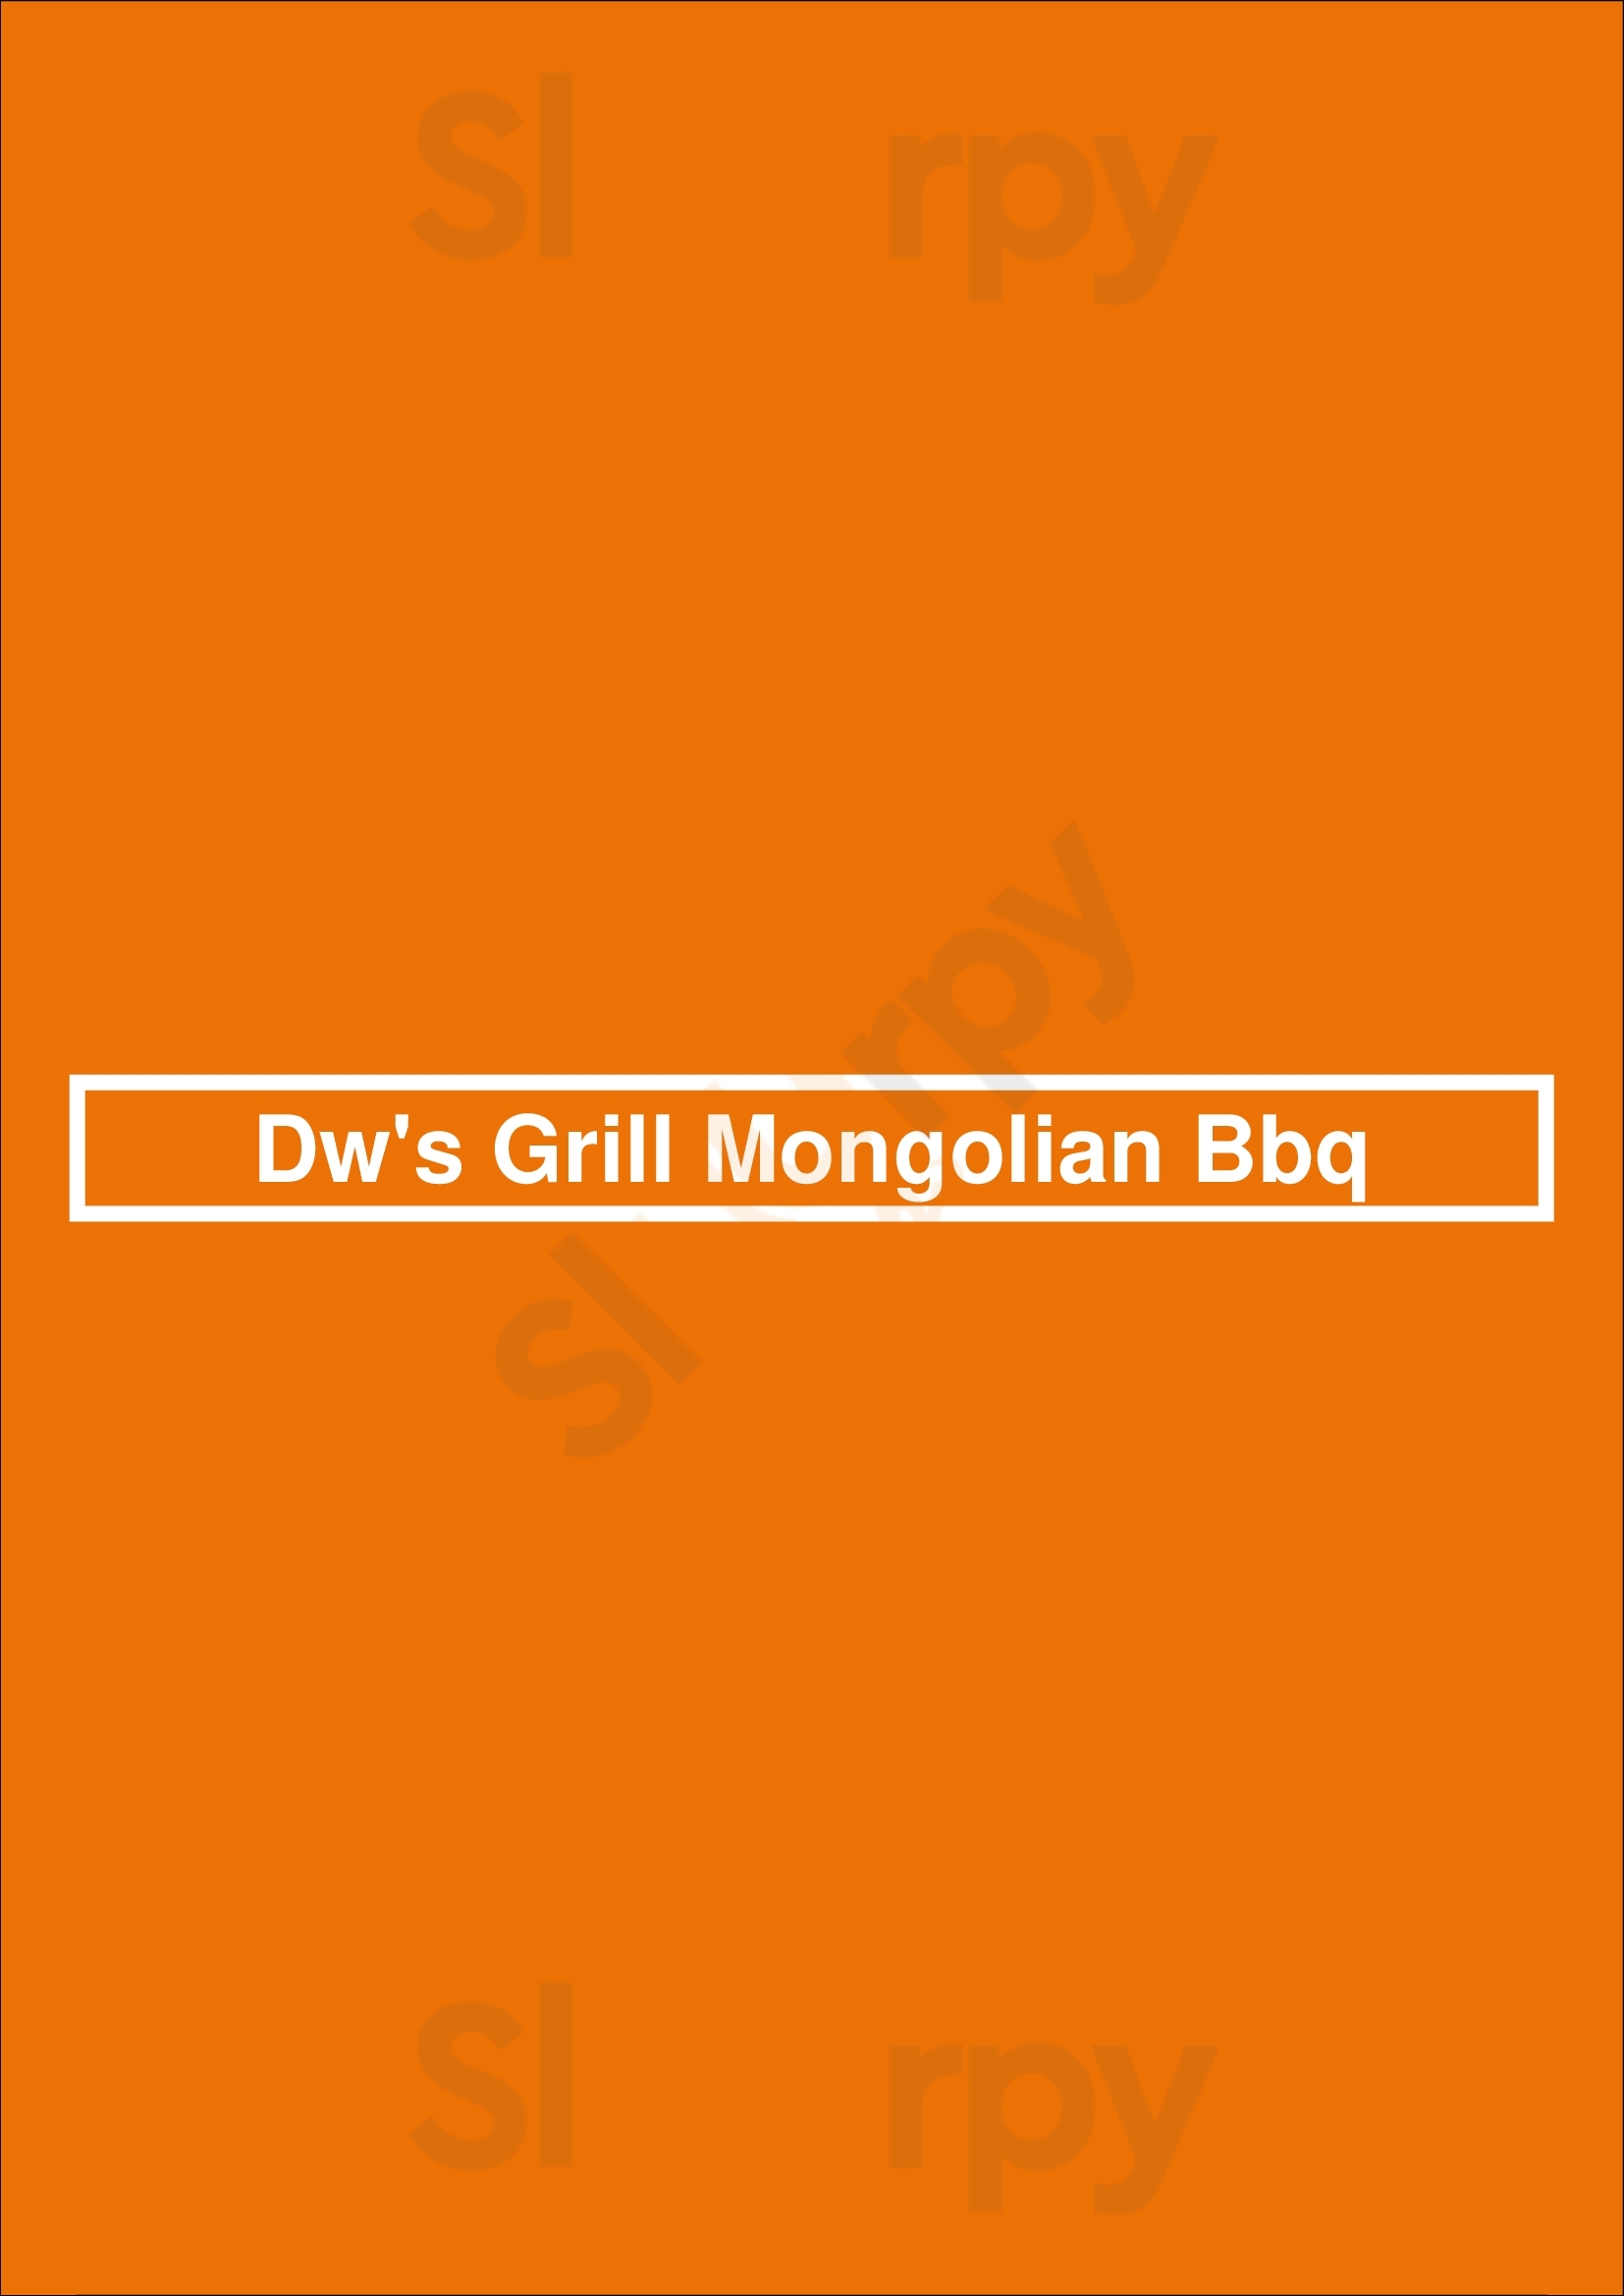 Dw's Grill Mongolian Bbq Virginia Beach Menu - 1